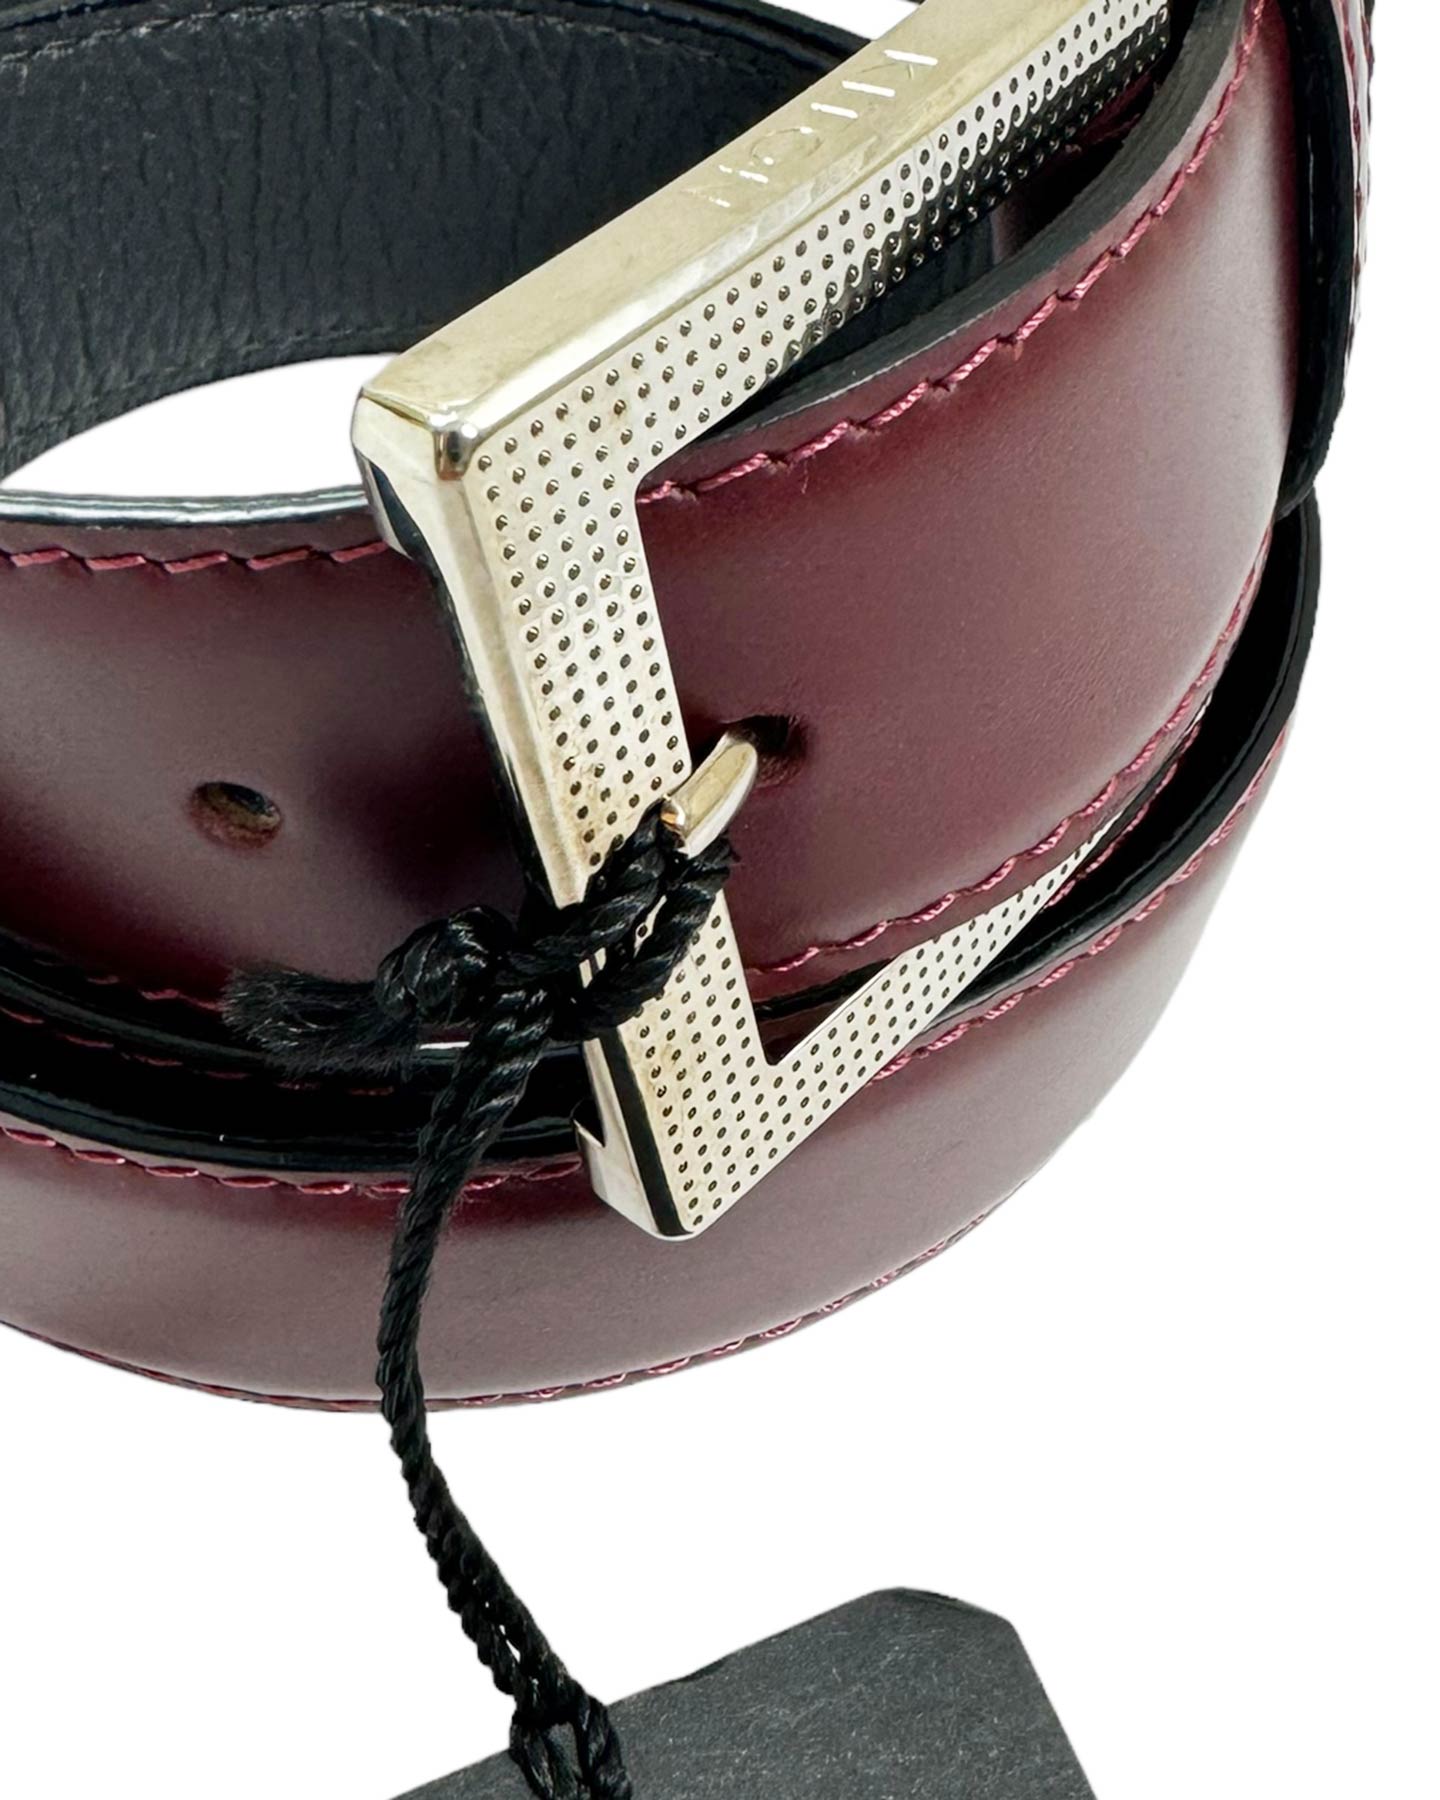 Kiton Belt Bordeaux Leather Men Belt